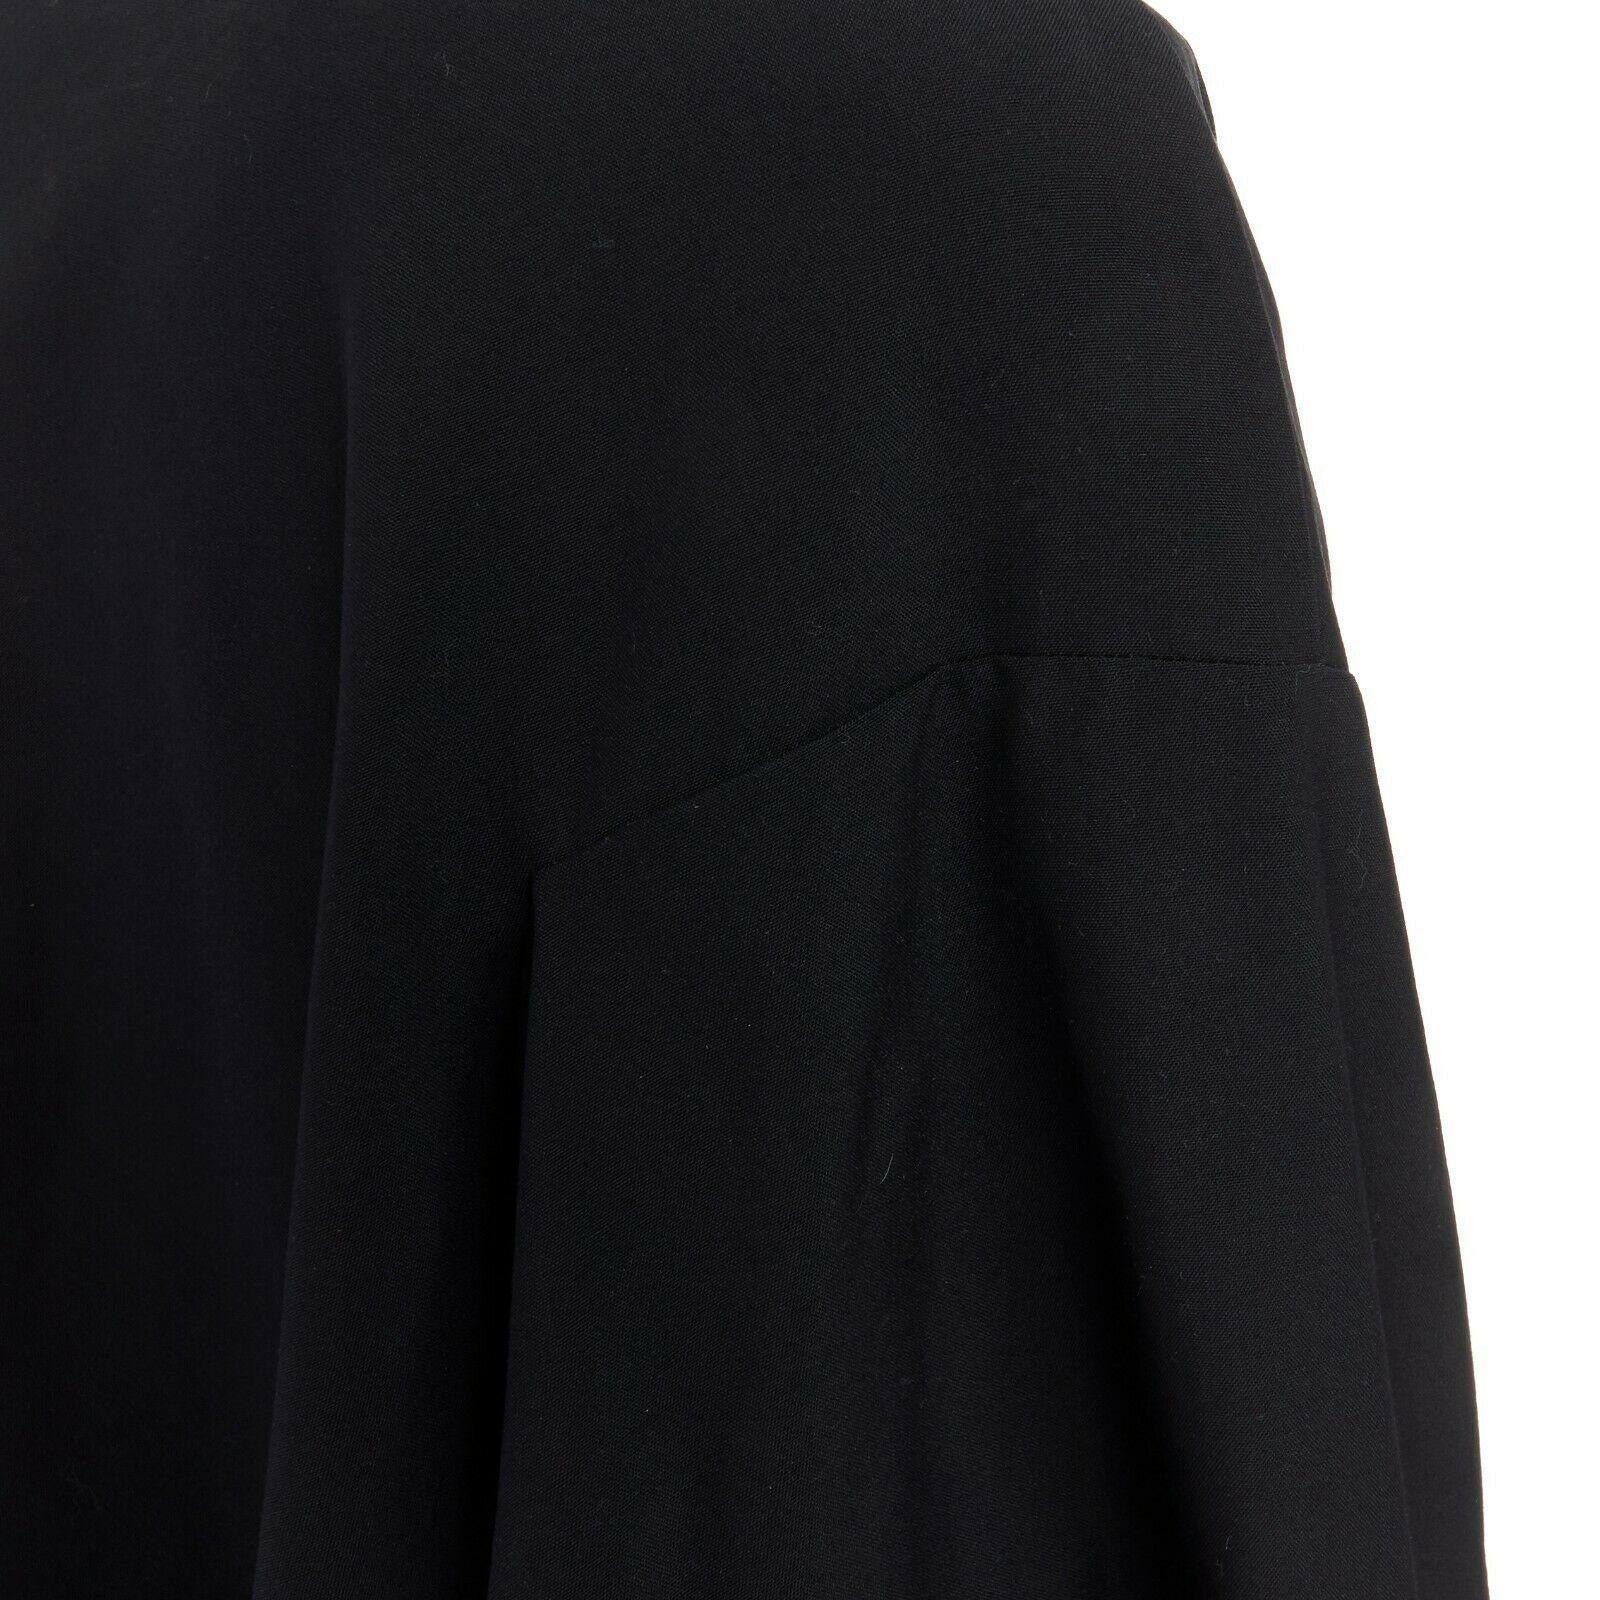 COMME DES GARCONS 1996 black wool asymmetric volume cut boxy blazer jacket S 5